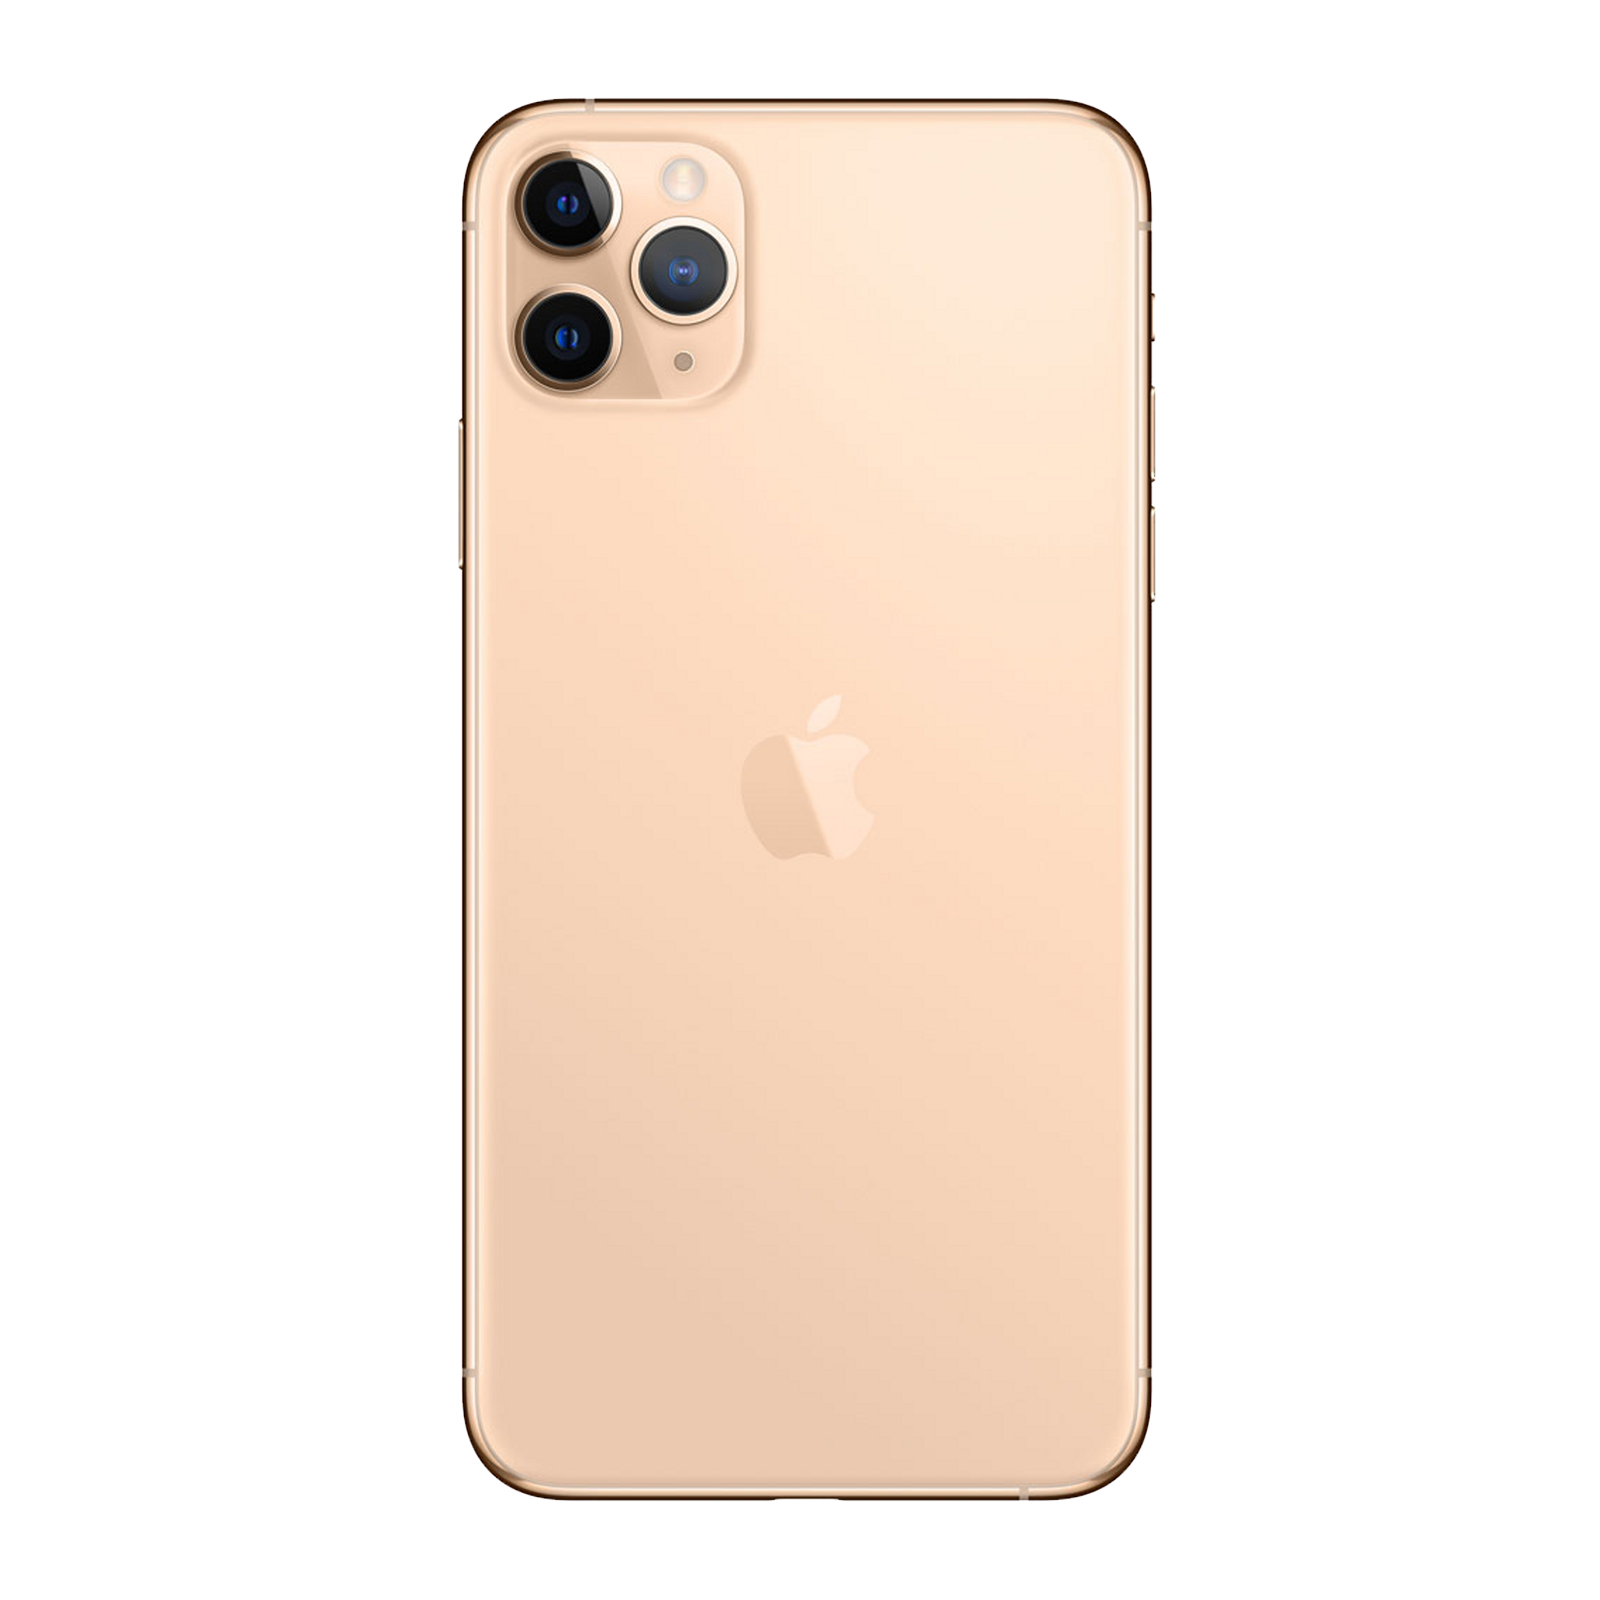 Apple iPhone 11 Pro Max 512GB Gold Very Good - Unlocked